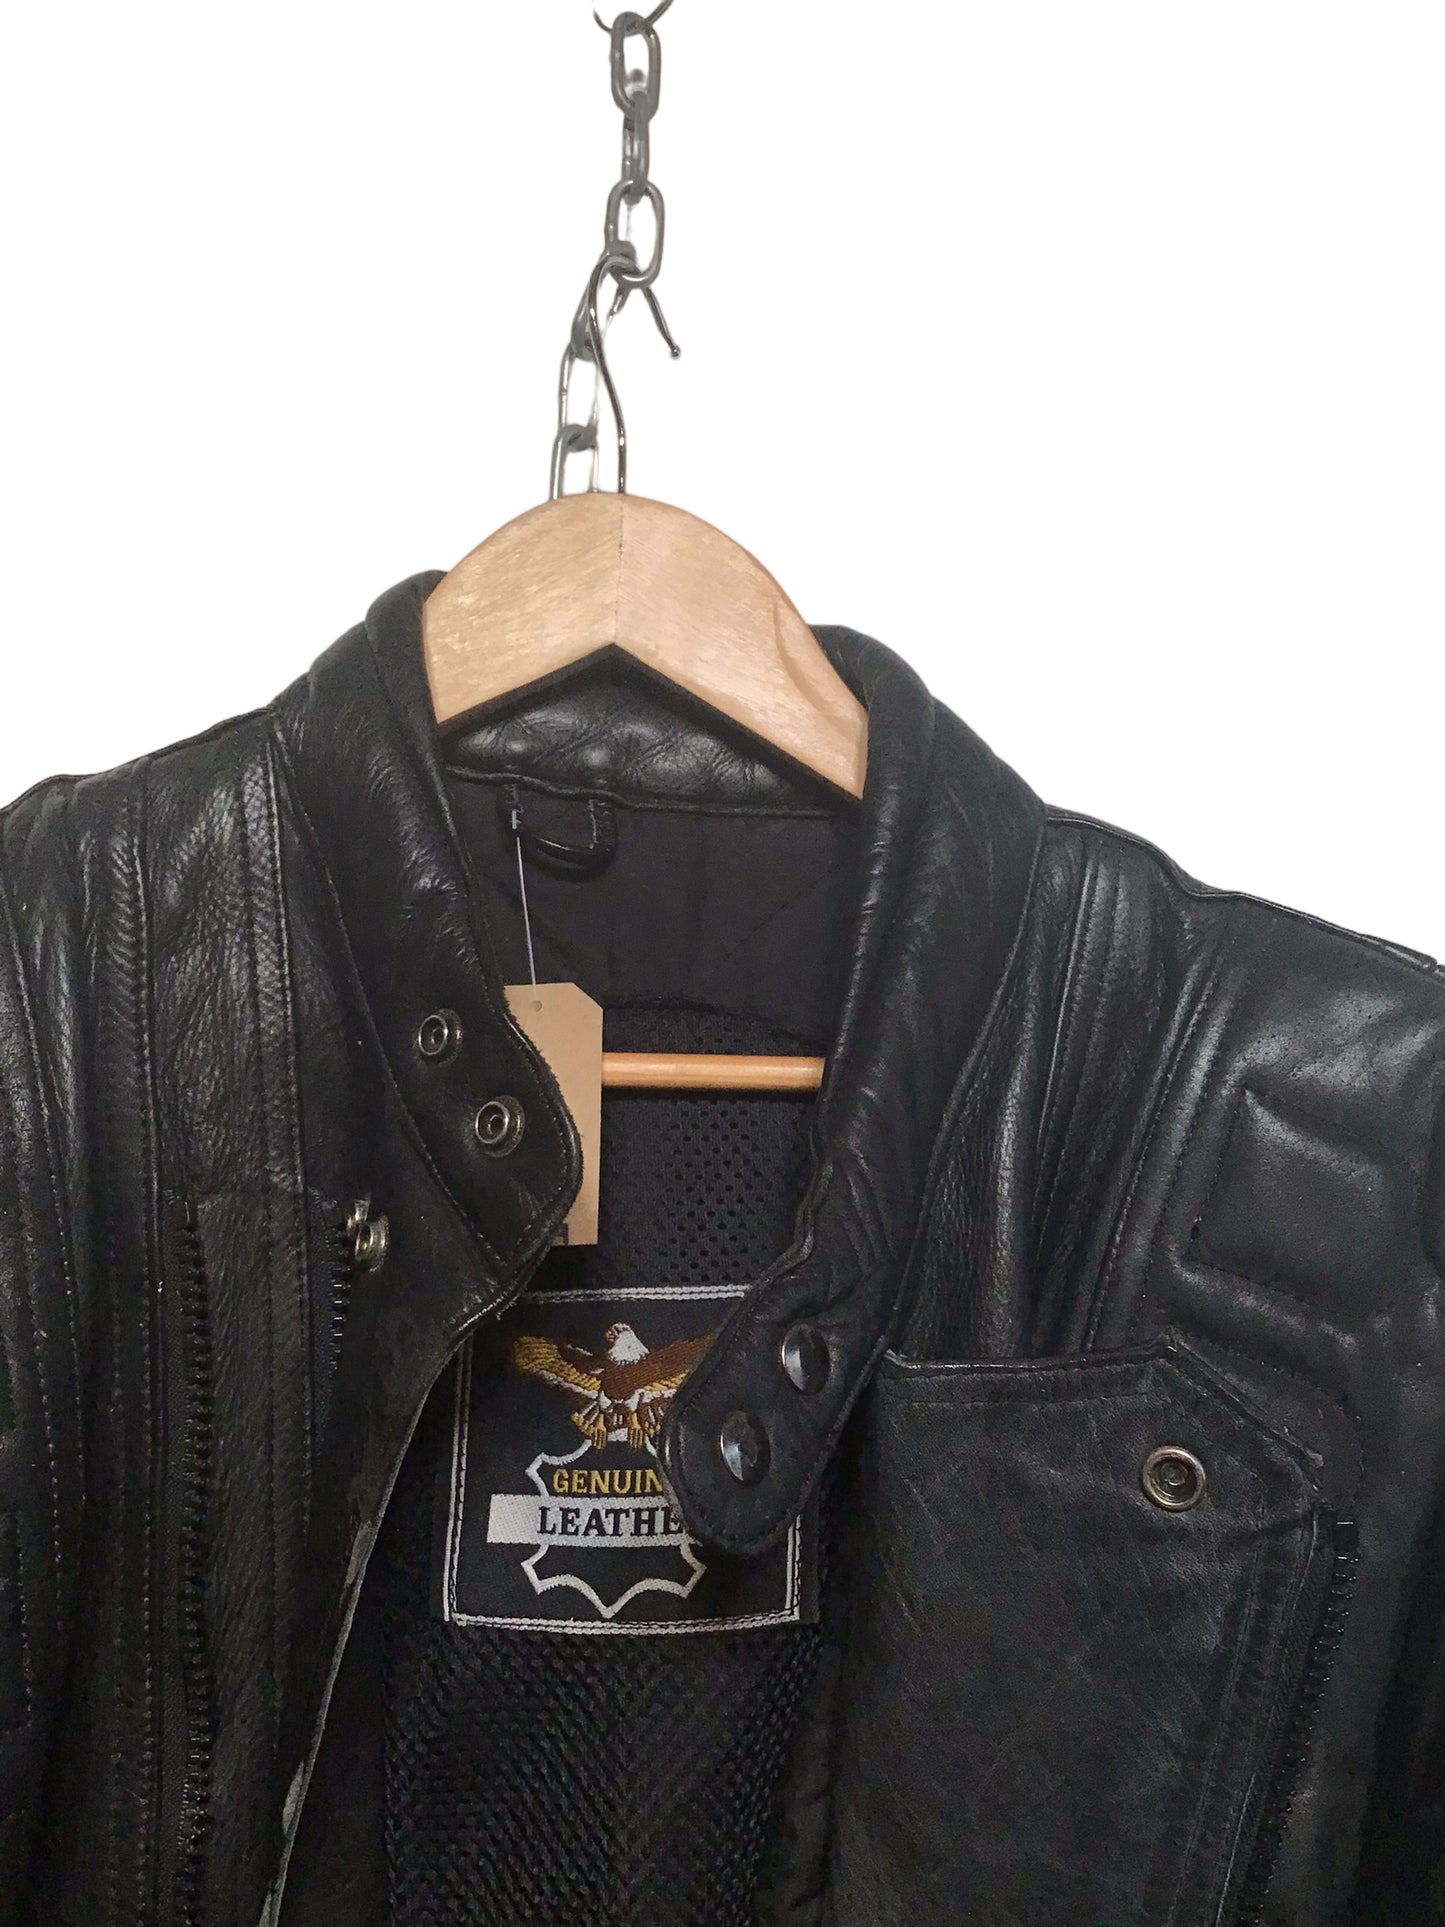 Genuine Leather Biker Jacket (Size M)